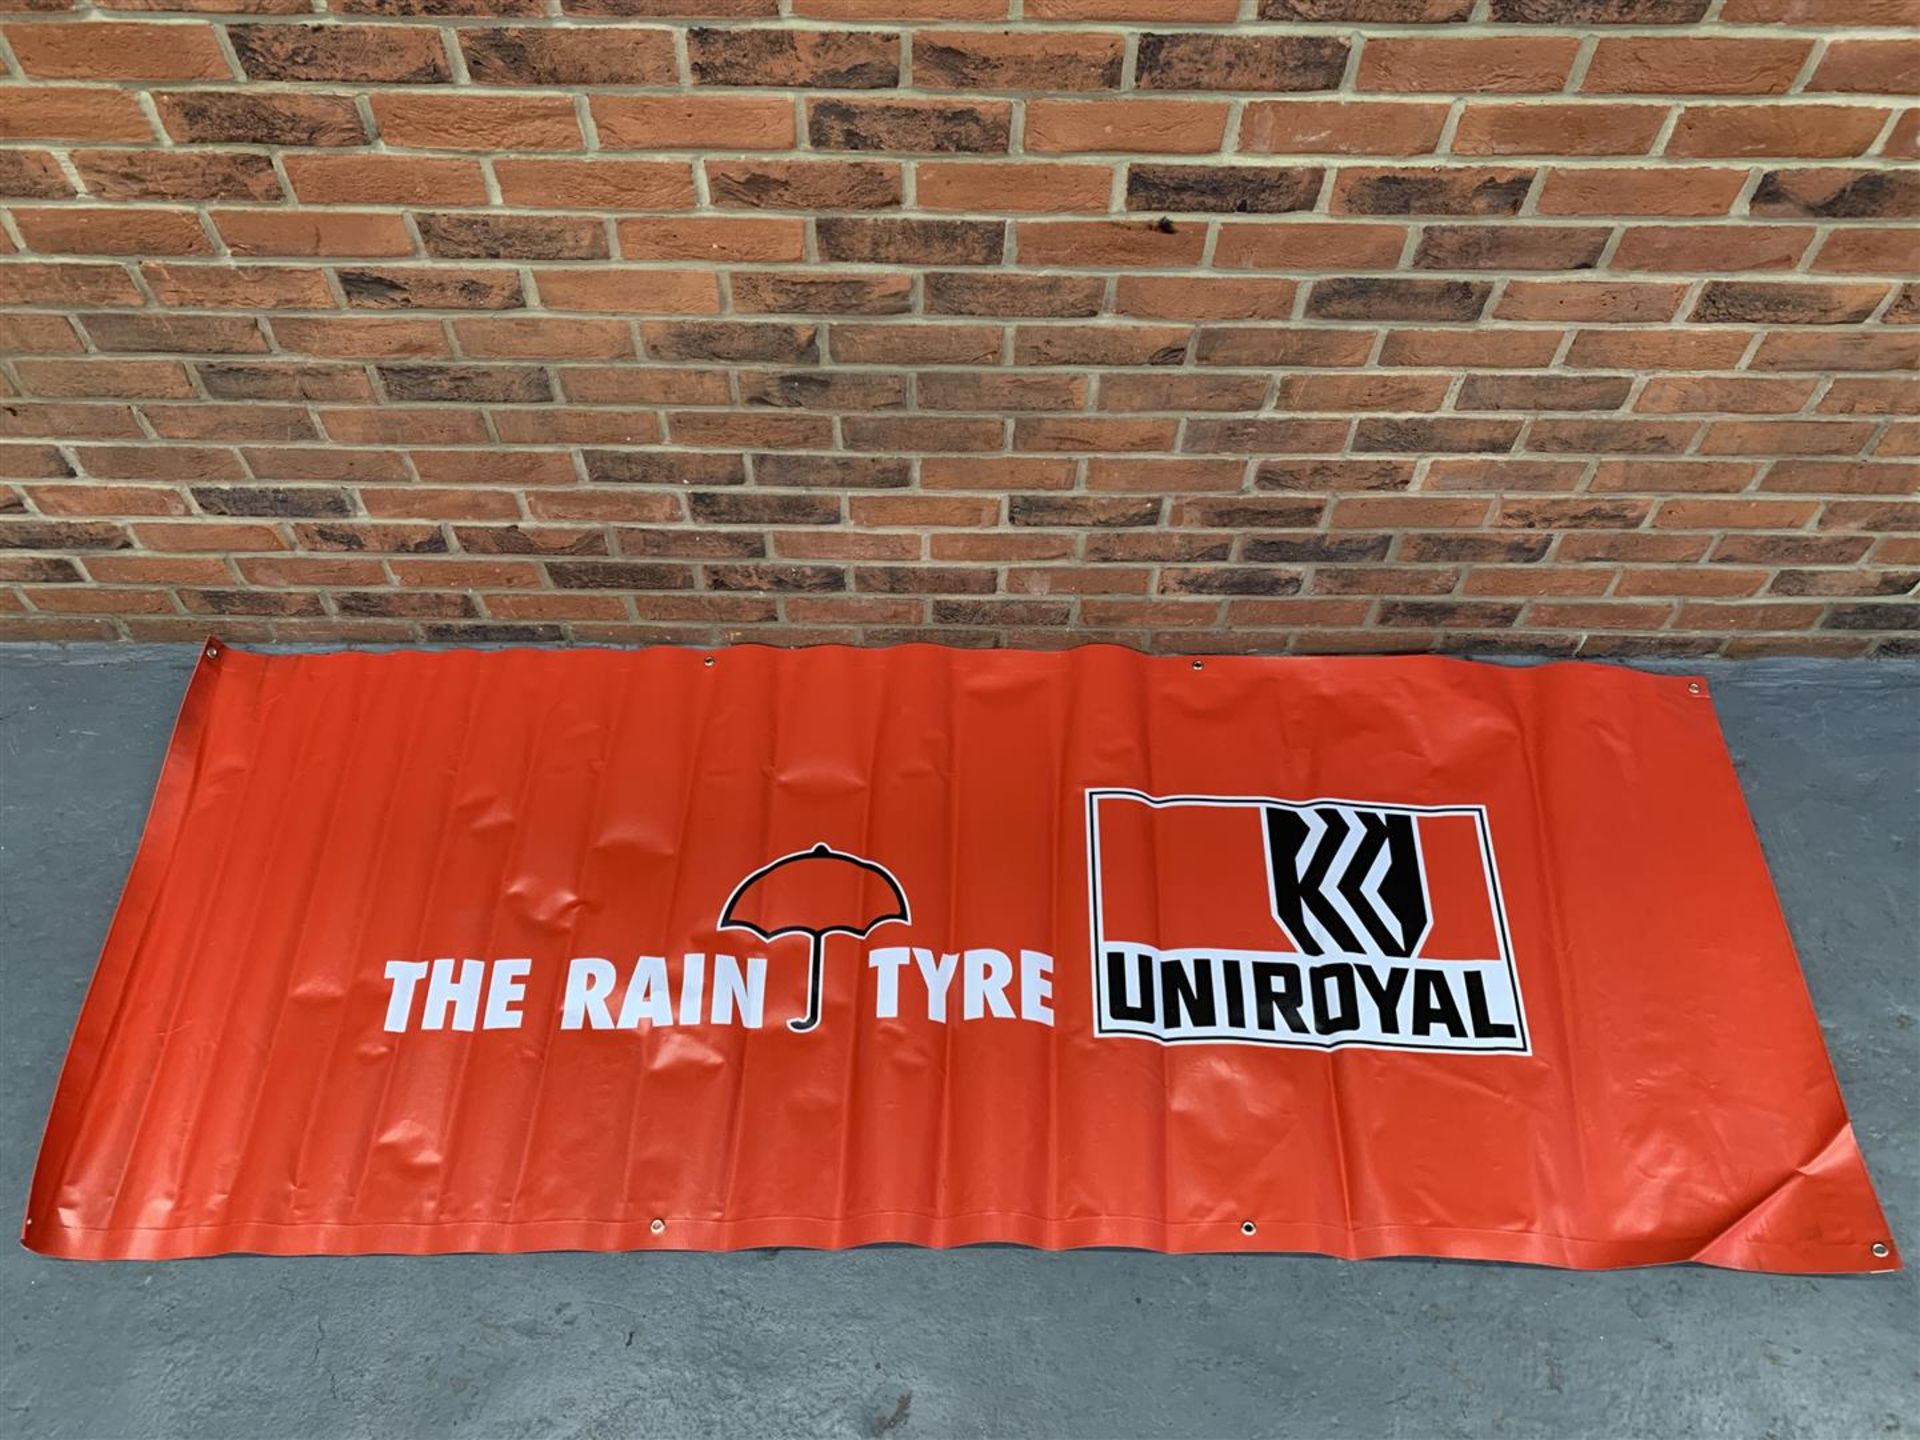 Uniroyal The Rain Tyre" Banner" - Image 2 of 2